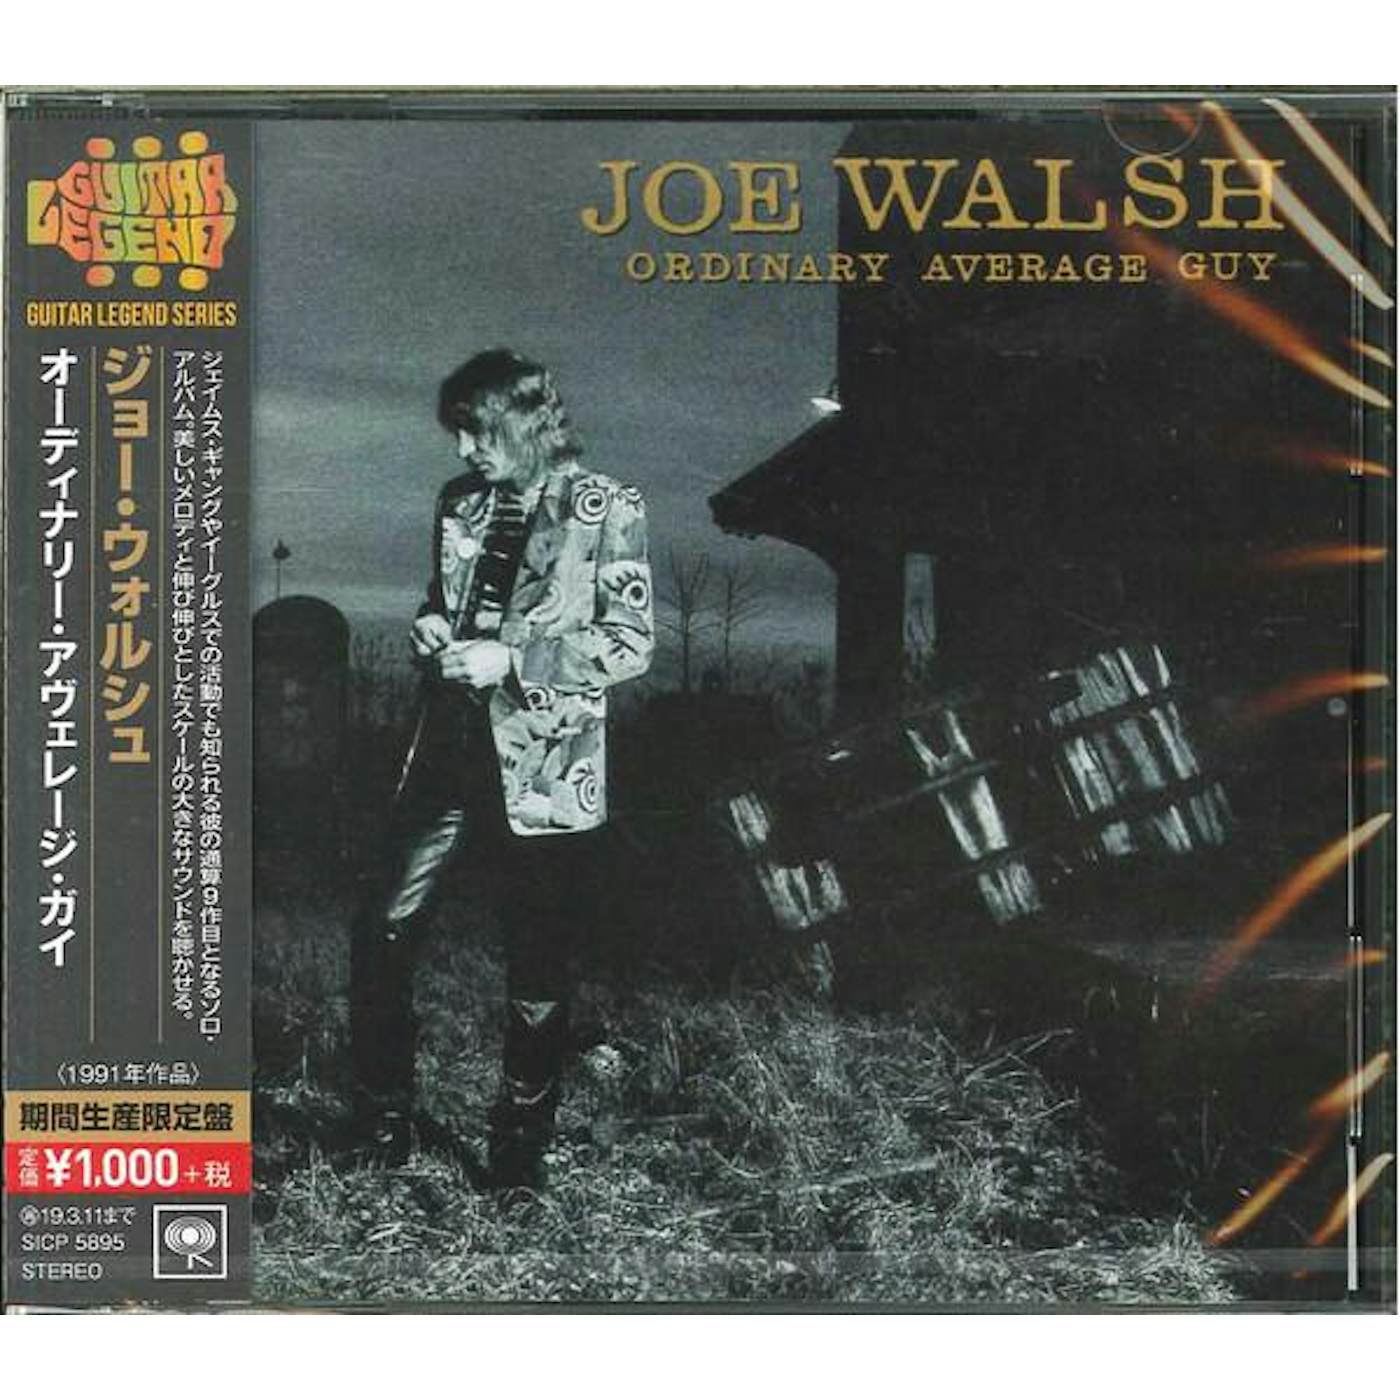 Joe Walsh ORDINARY AVERAGE GUY (LIMITED) CD